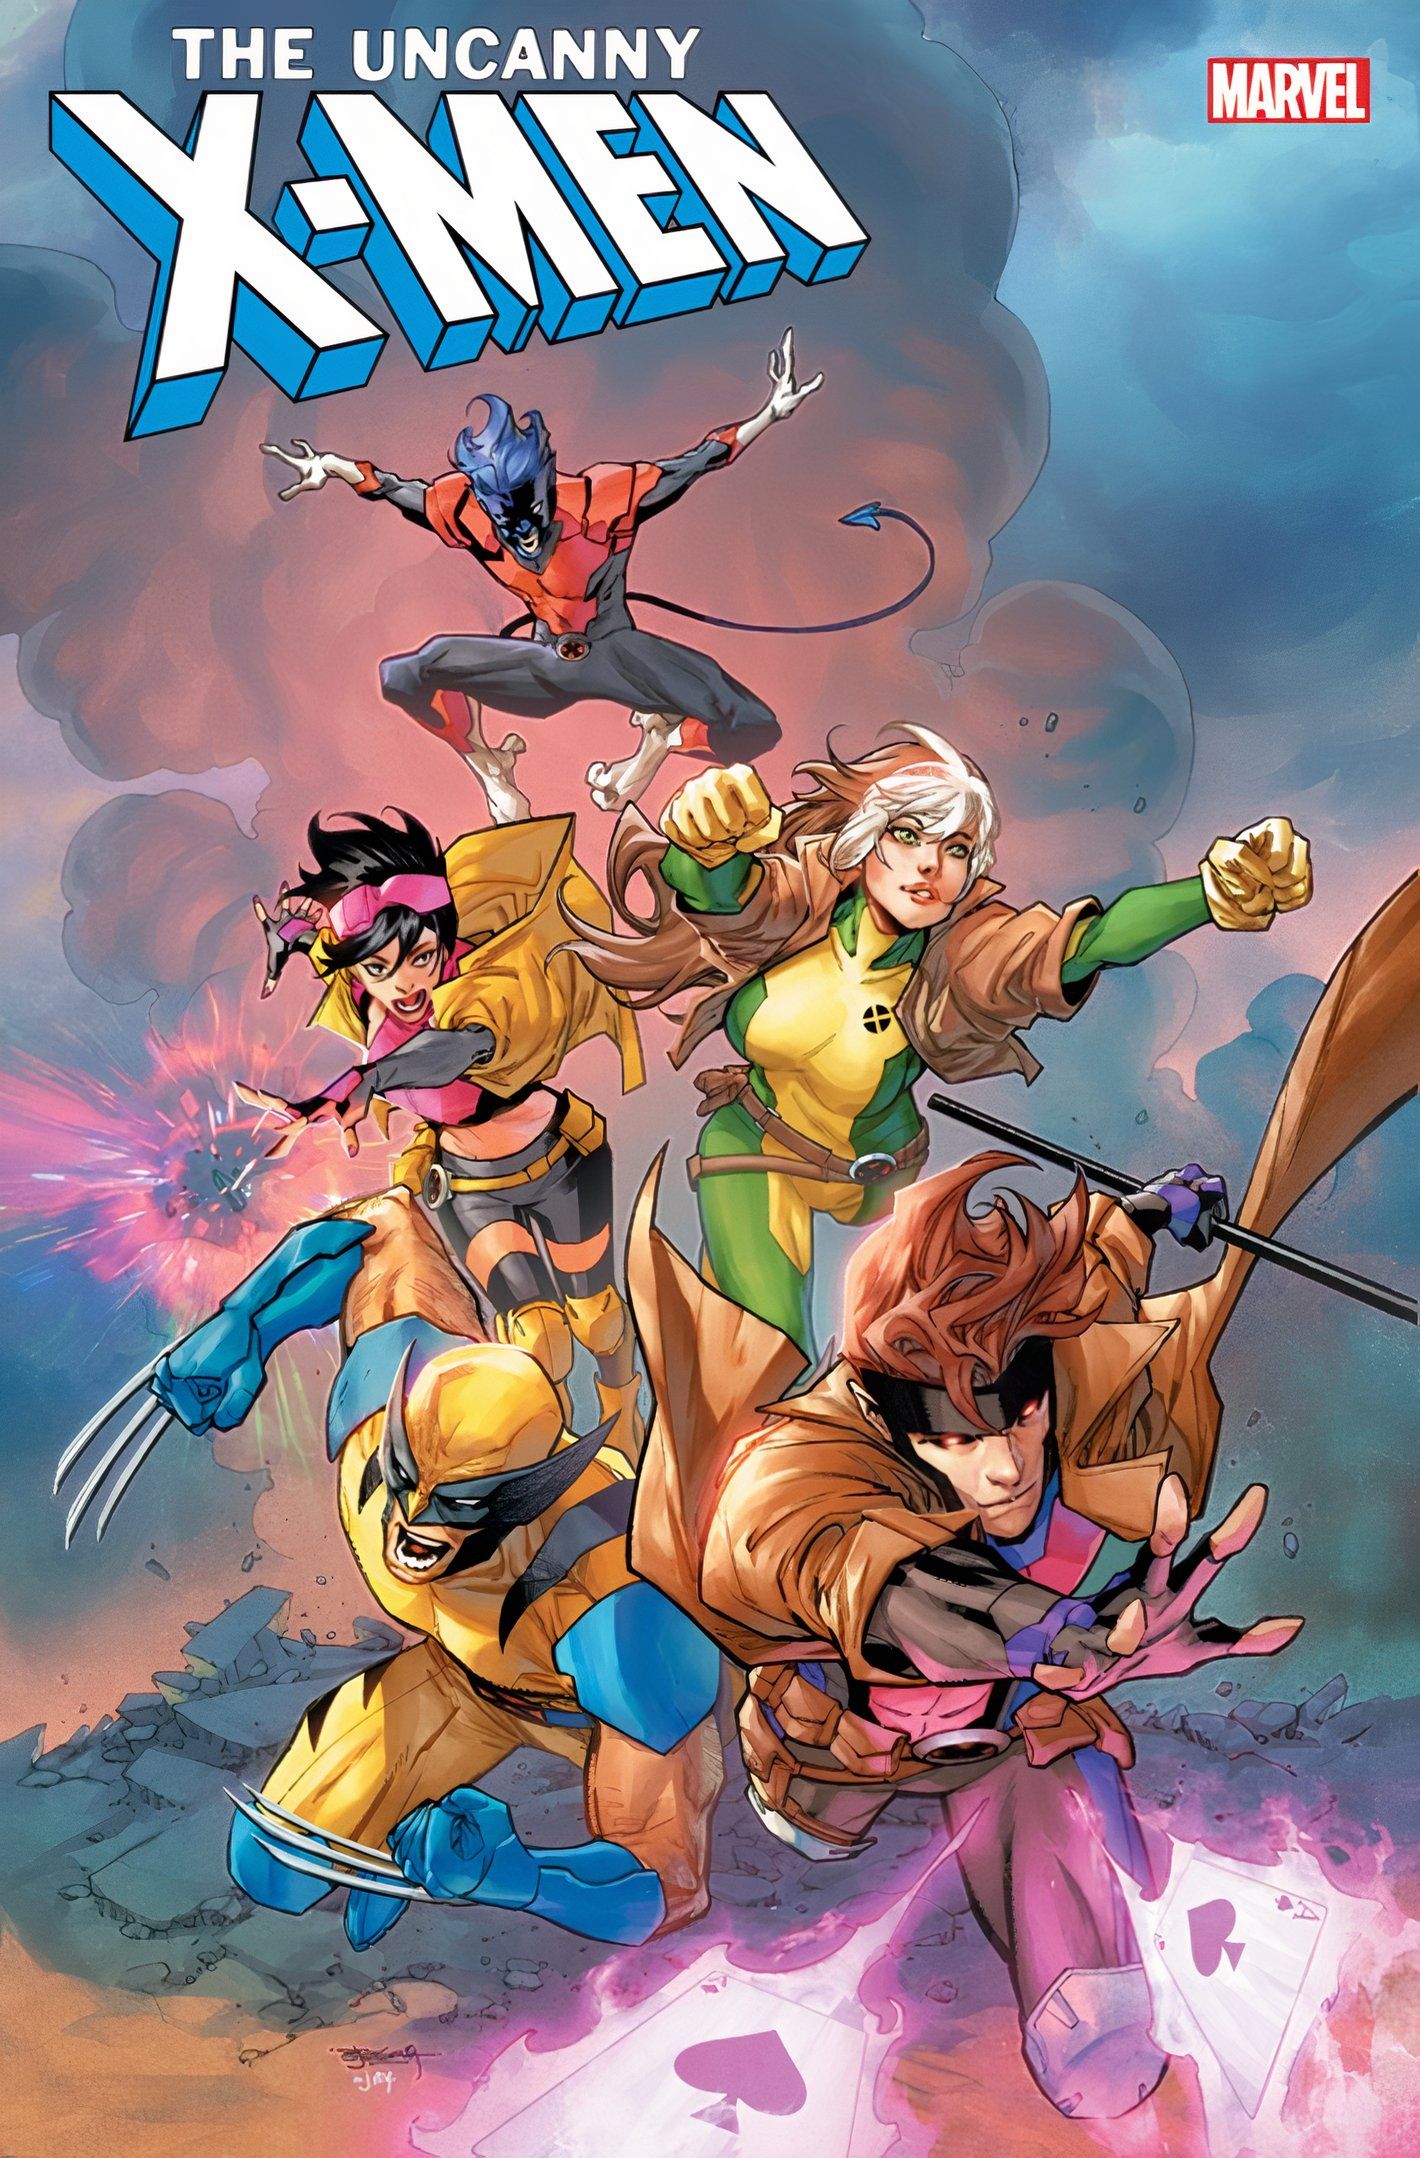 Capa da revista Uncanny X-Men #1, com Wolverine, Gambit, Vampira, Jubileu e Noturno